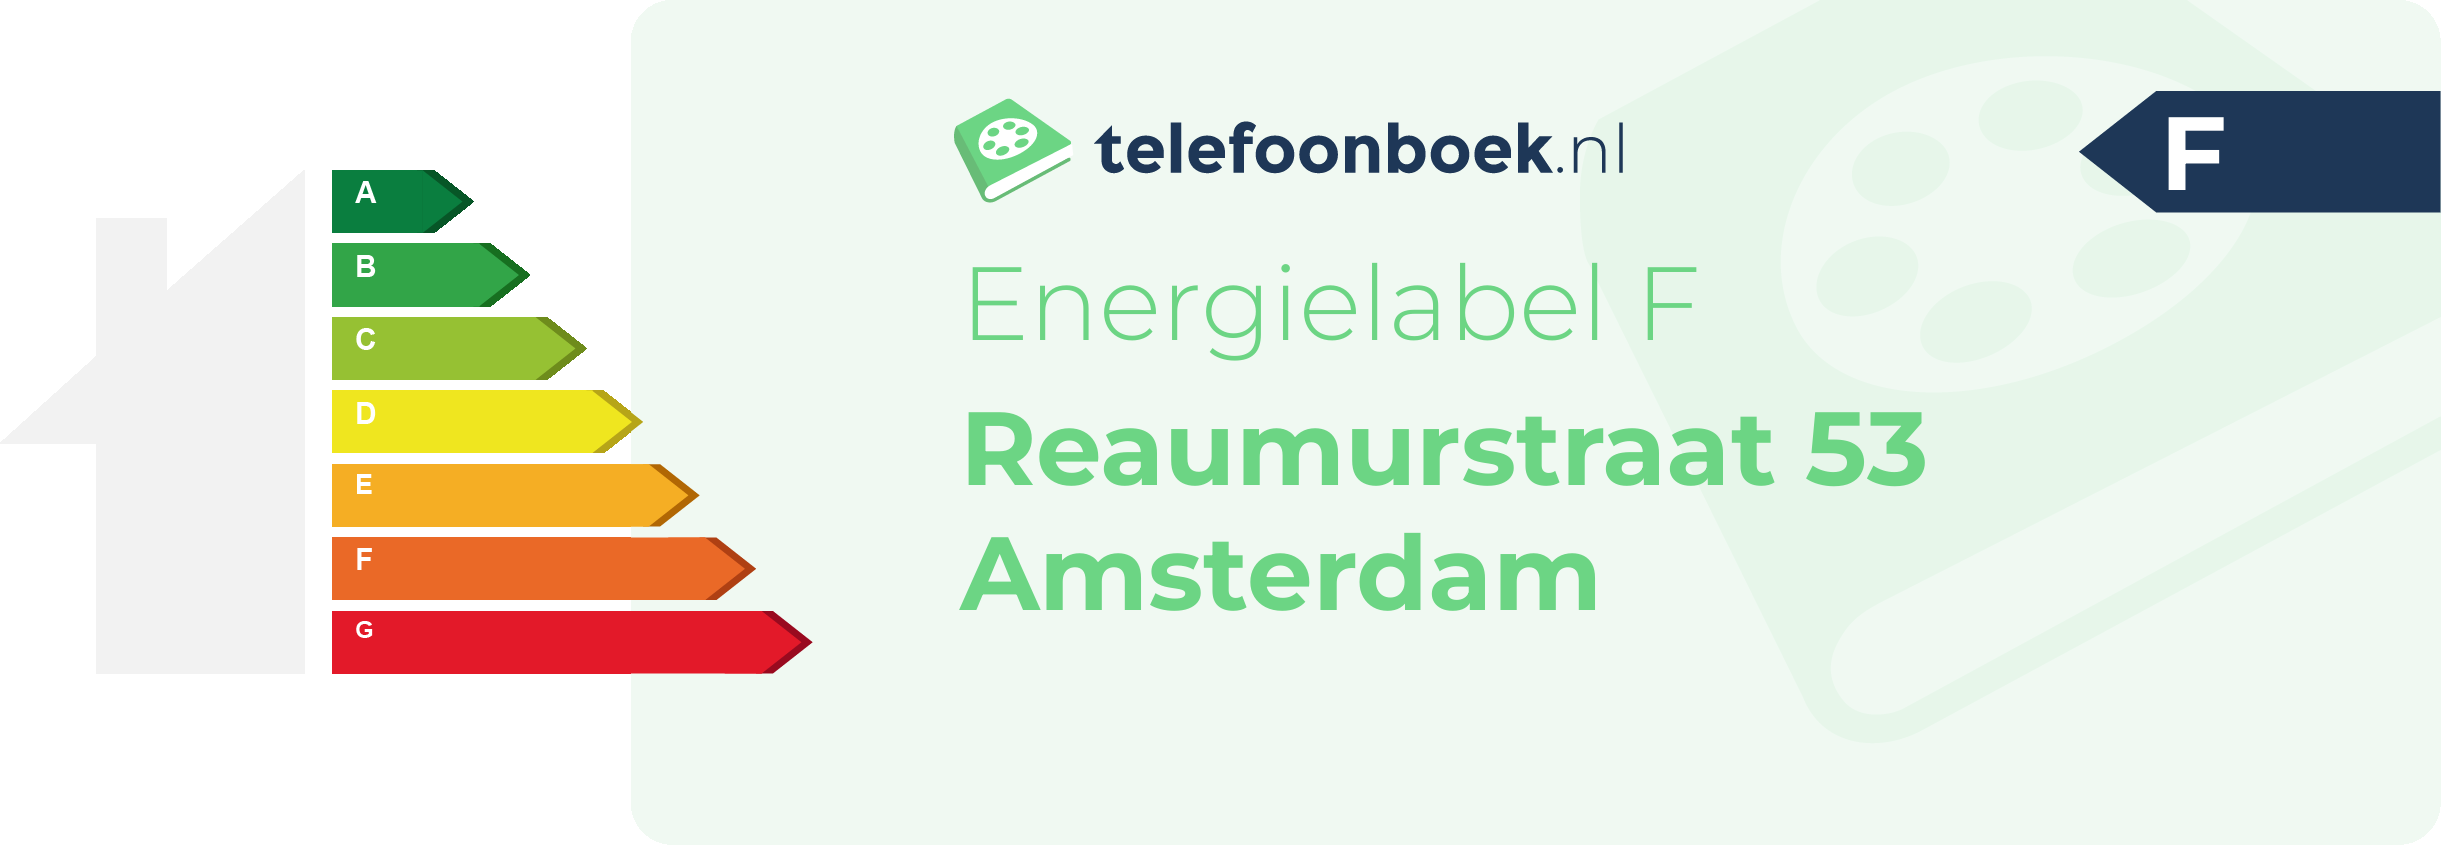 Energielabel Reaumurstraat 53 Amsterdam